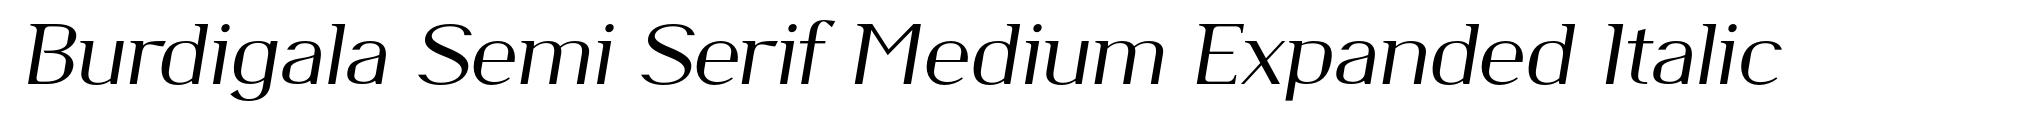 Burdigala Semi Serif Medium Expanded Italic image